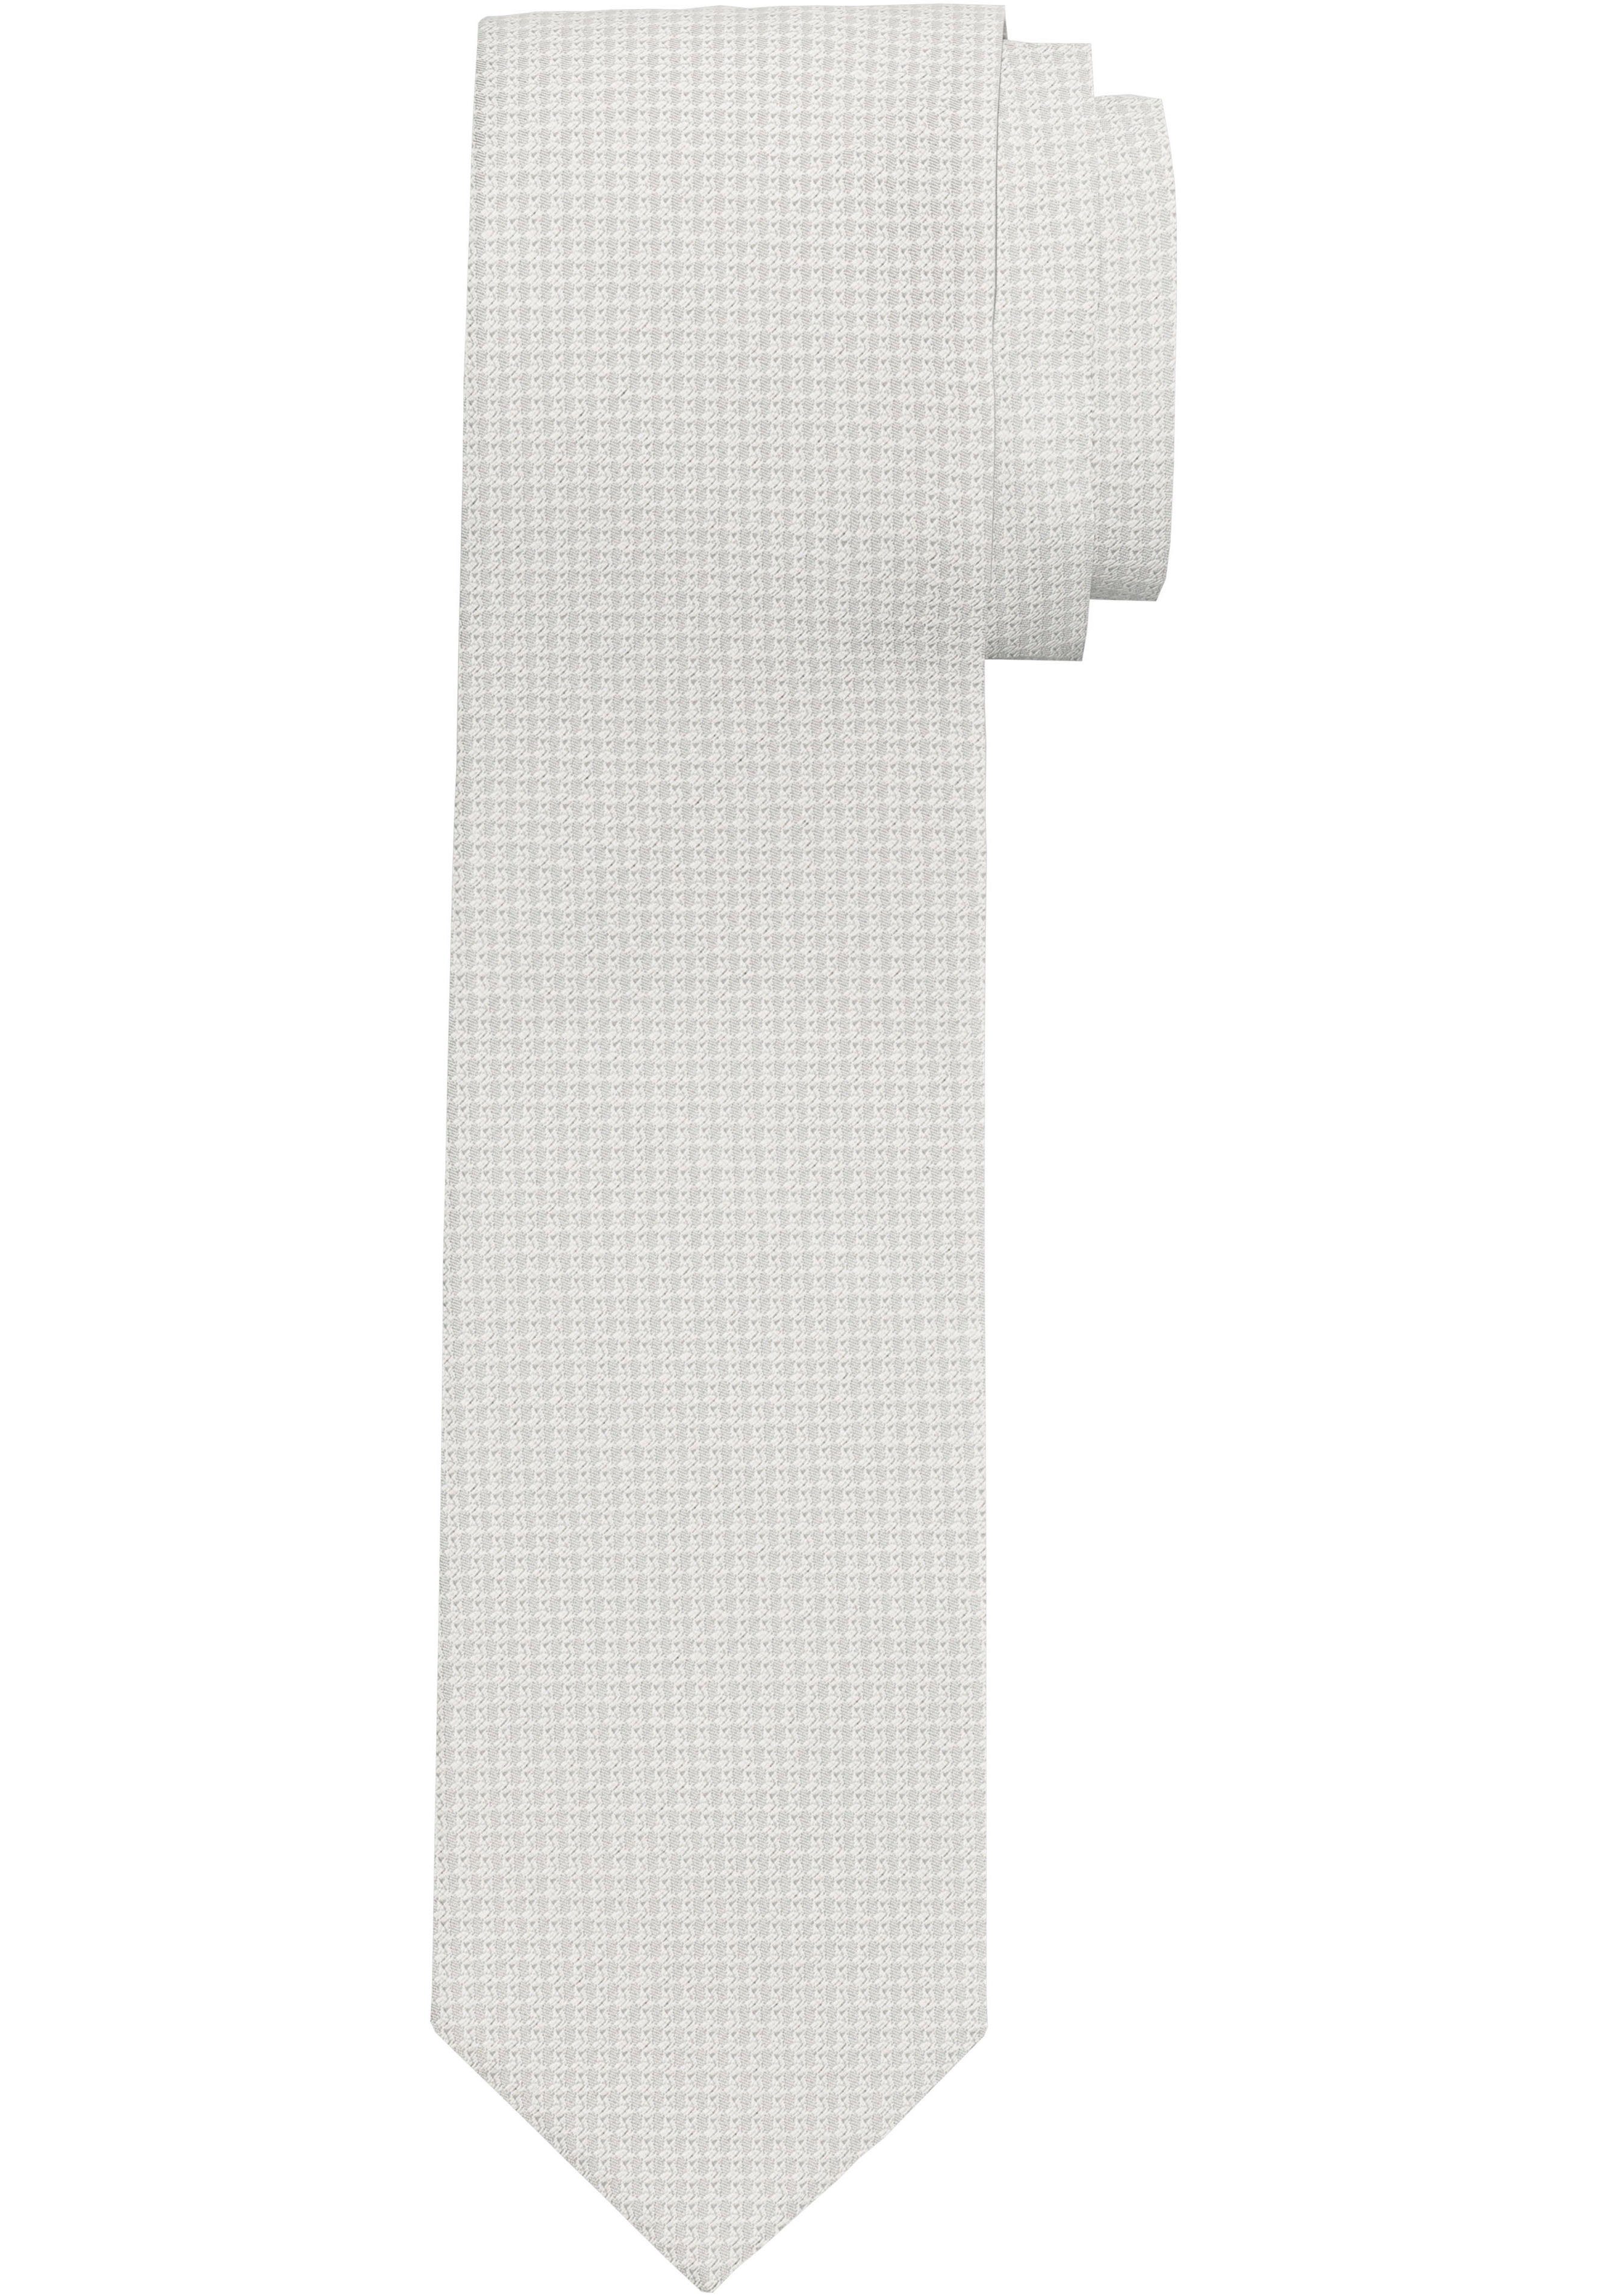 OLYMP Krawatte Krawatte mit Minimalmuster champagner | Breite Krawatten